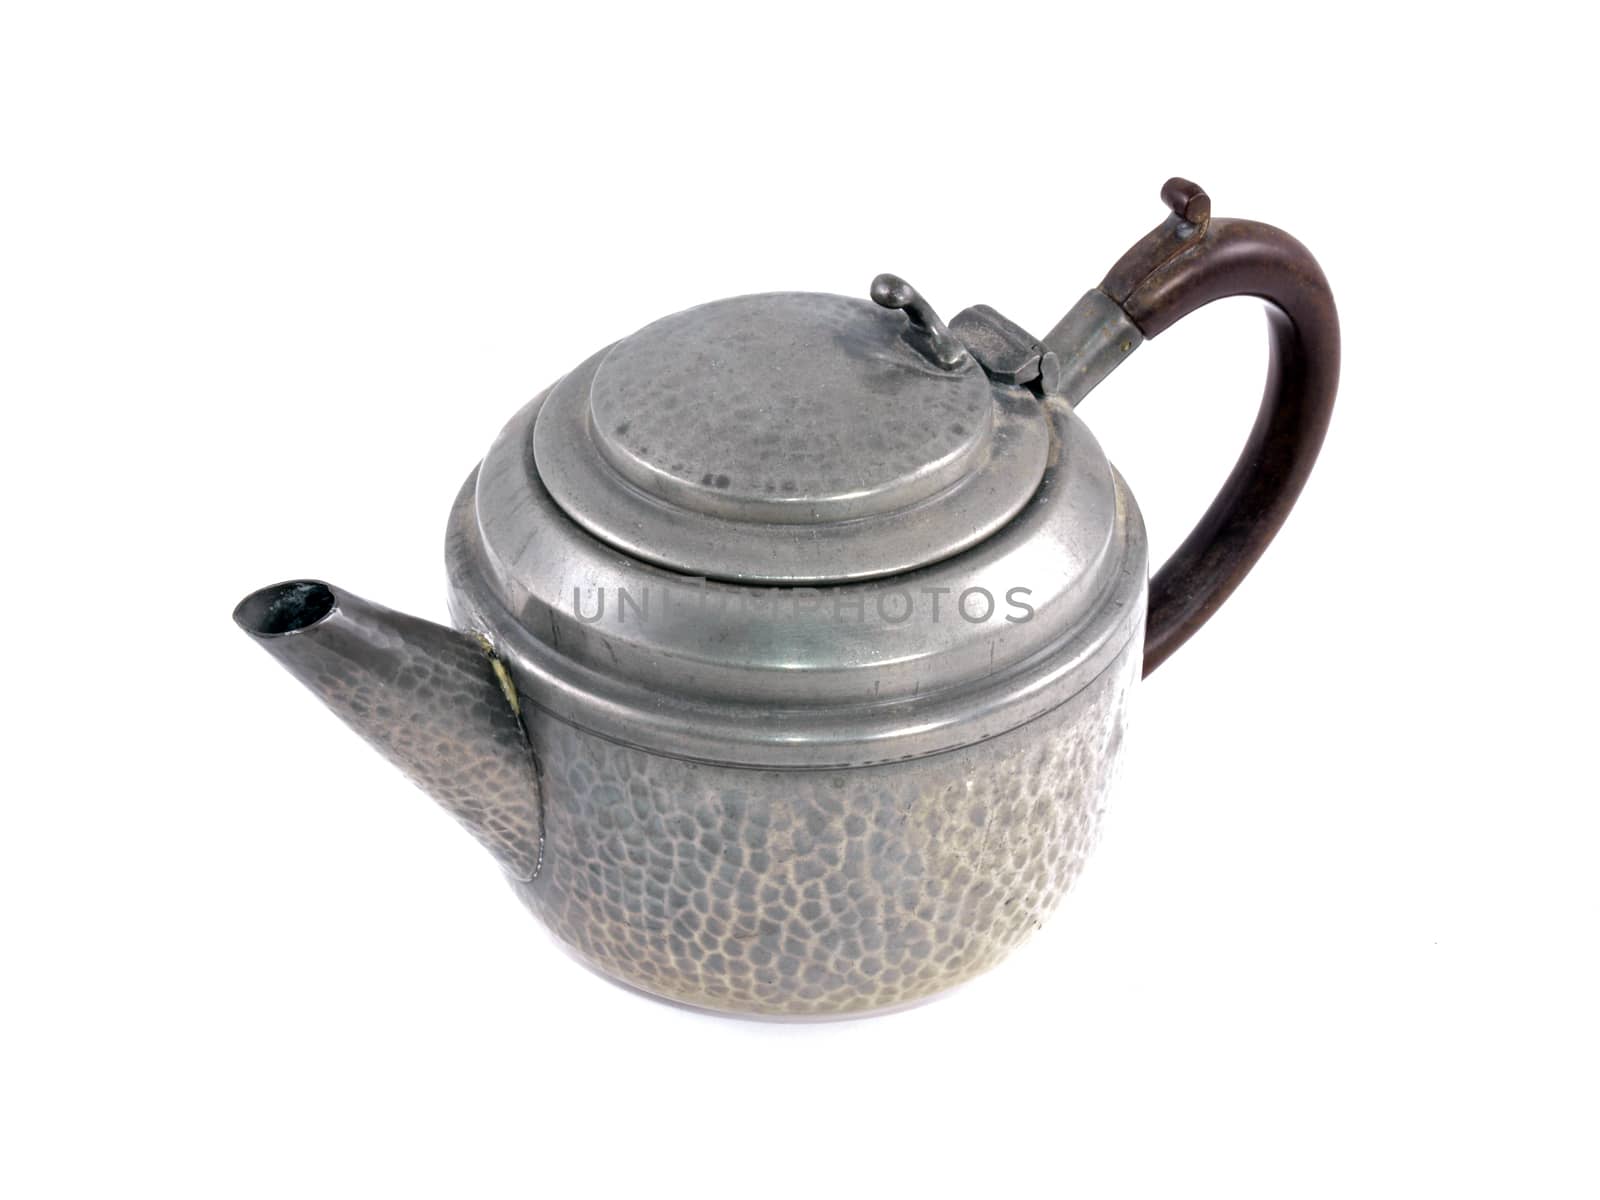 Pewter tea pot by ianlangley